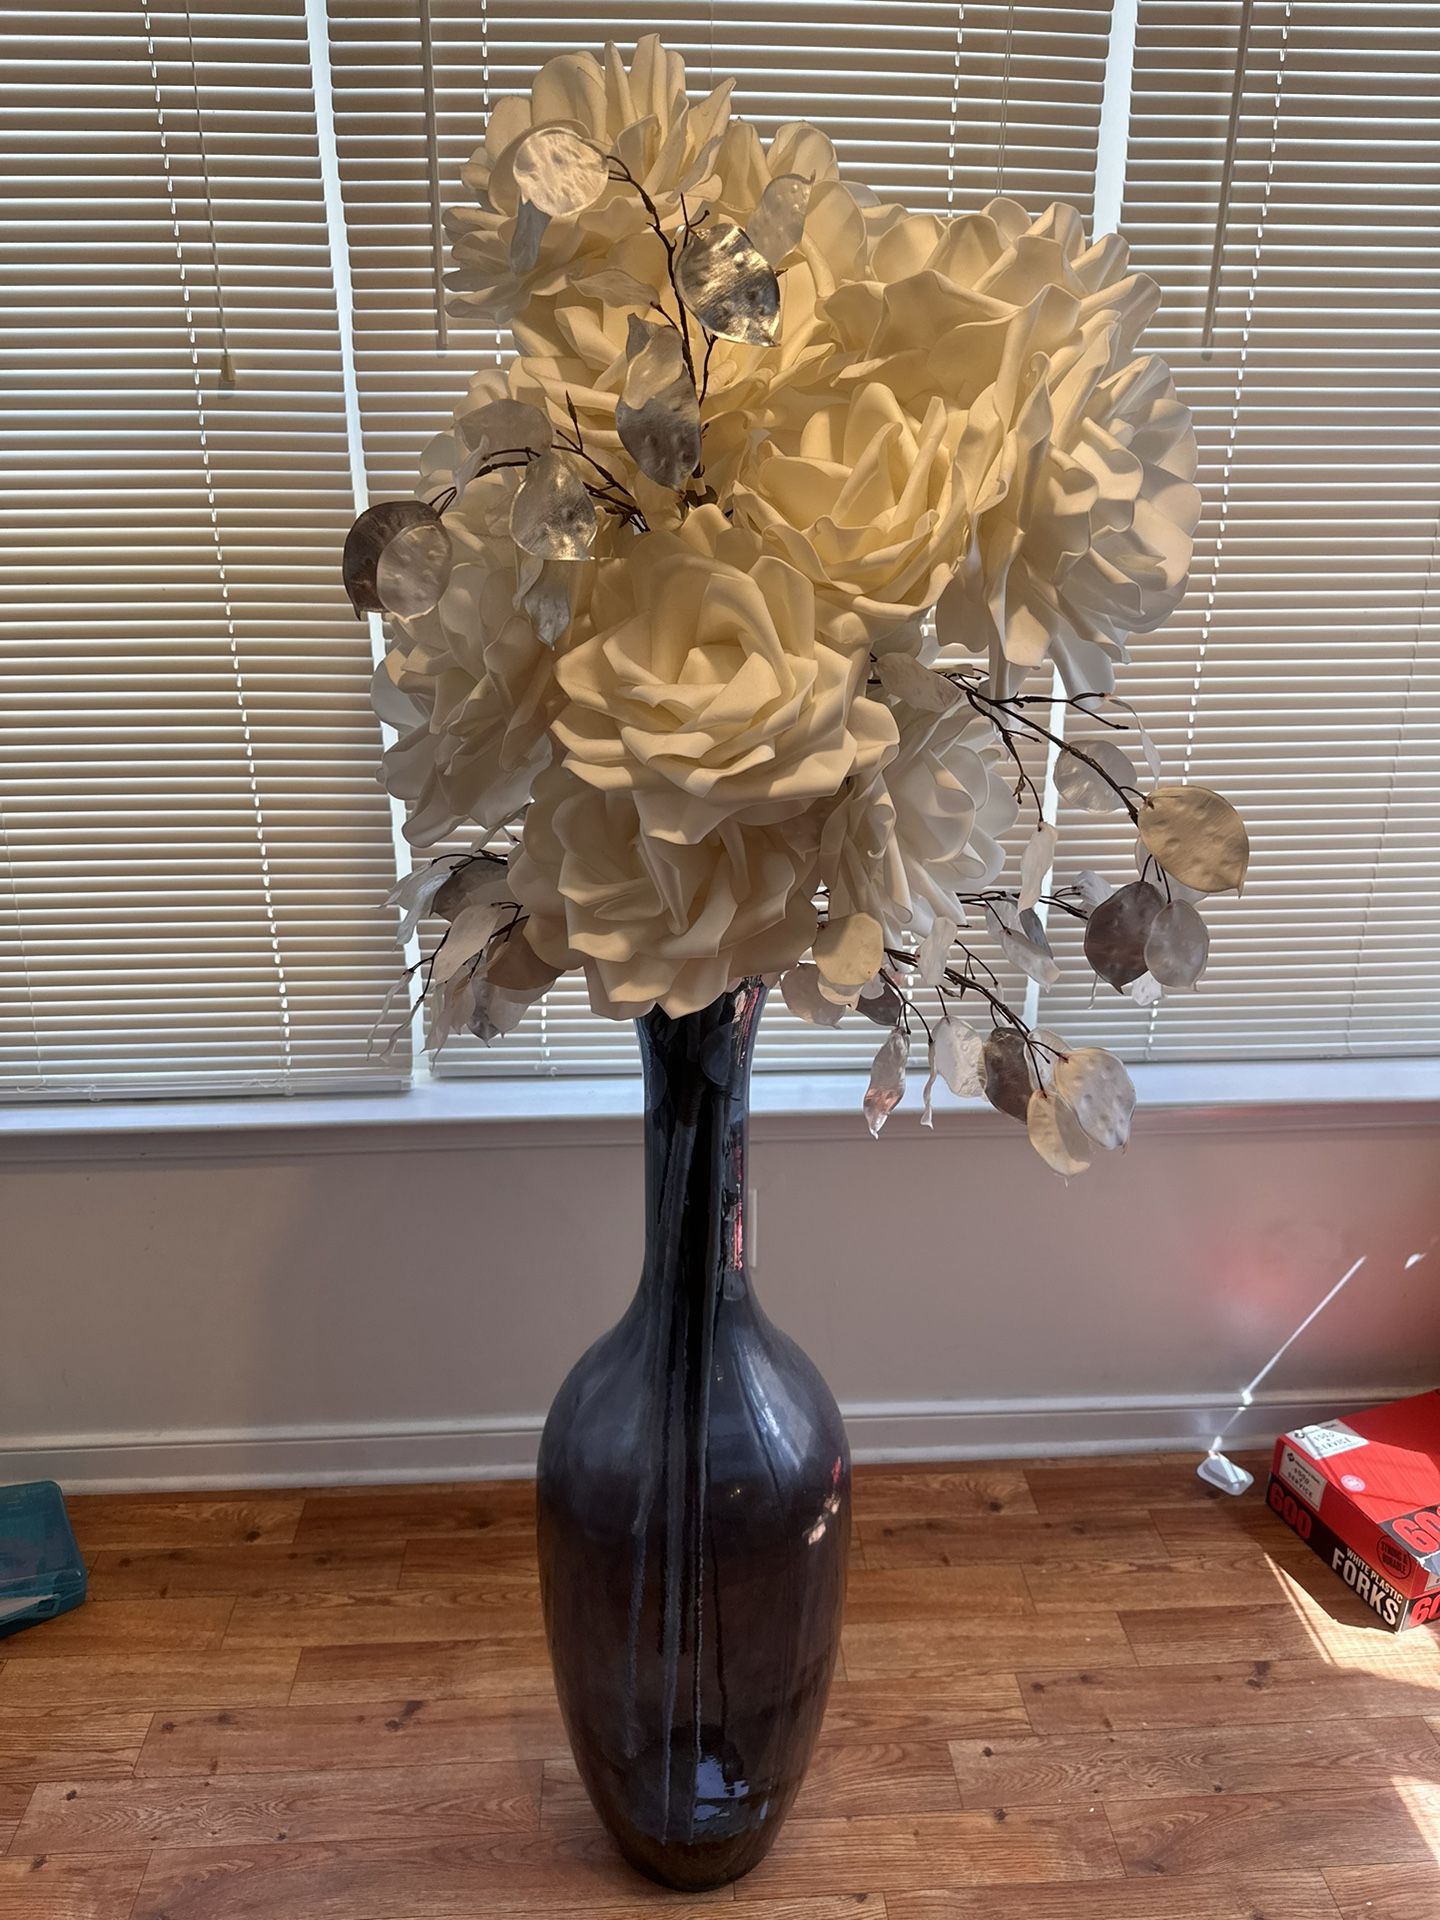 Floor Vase With Flowers 